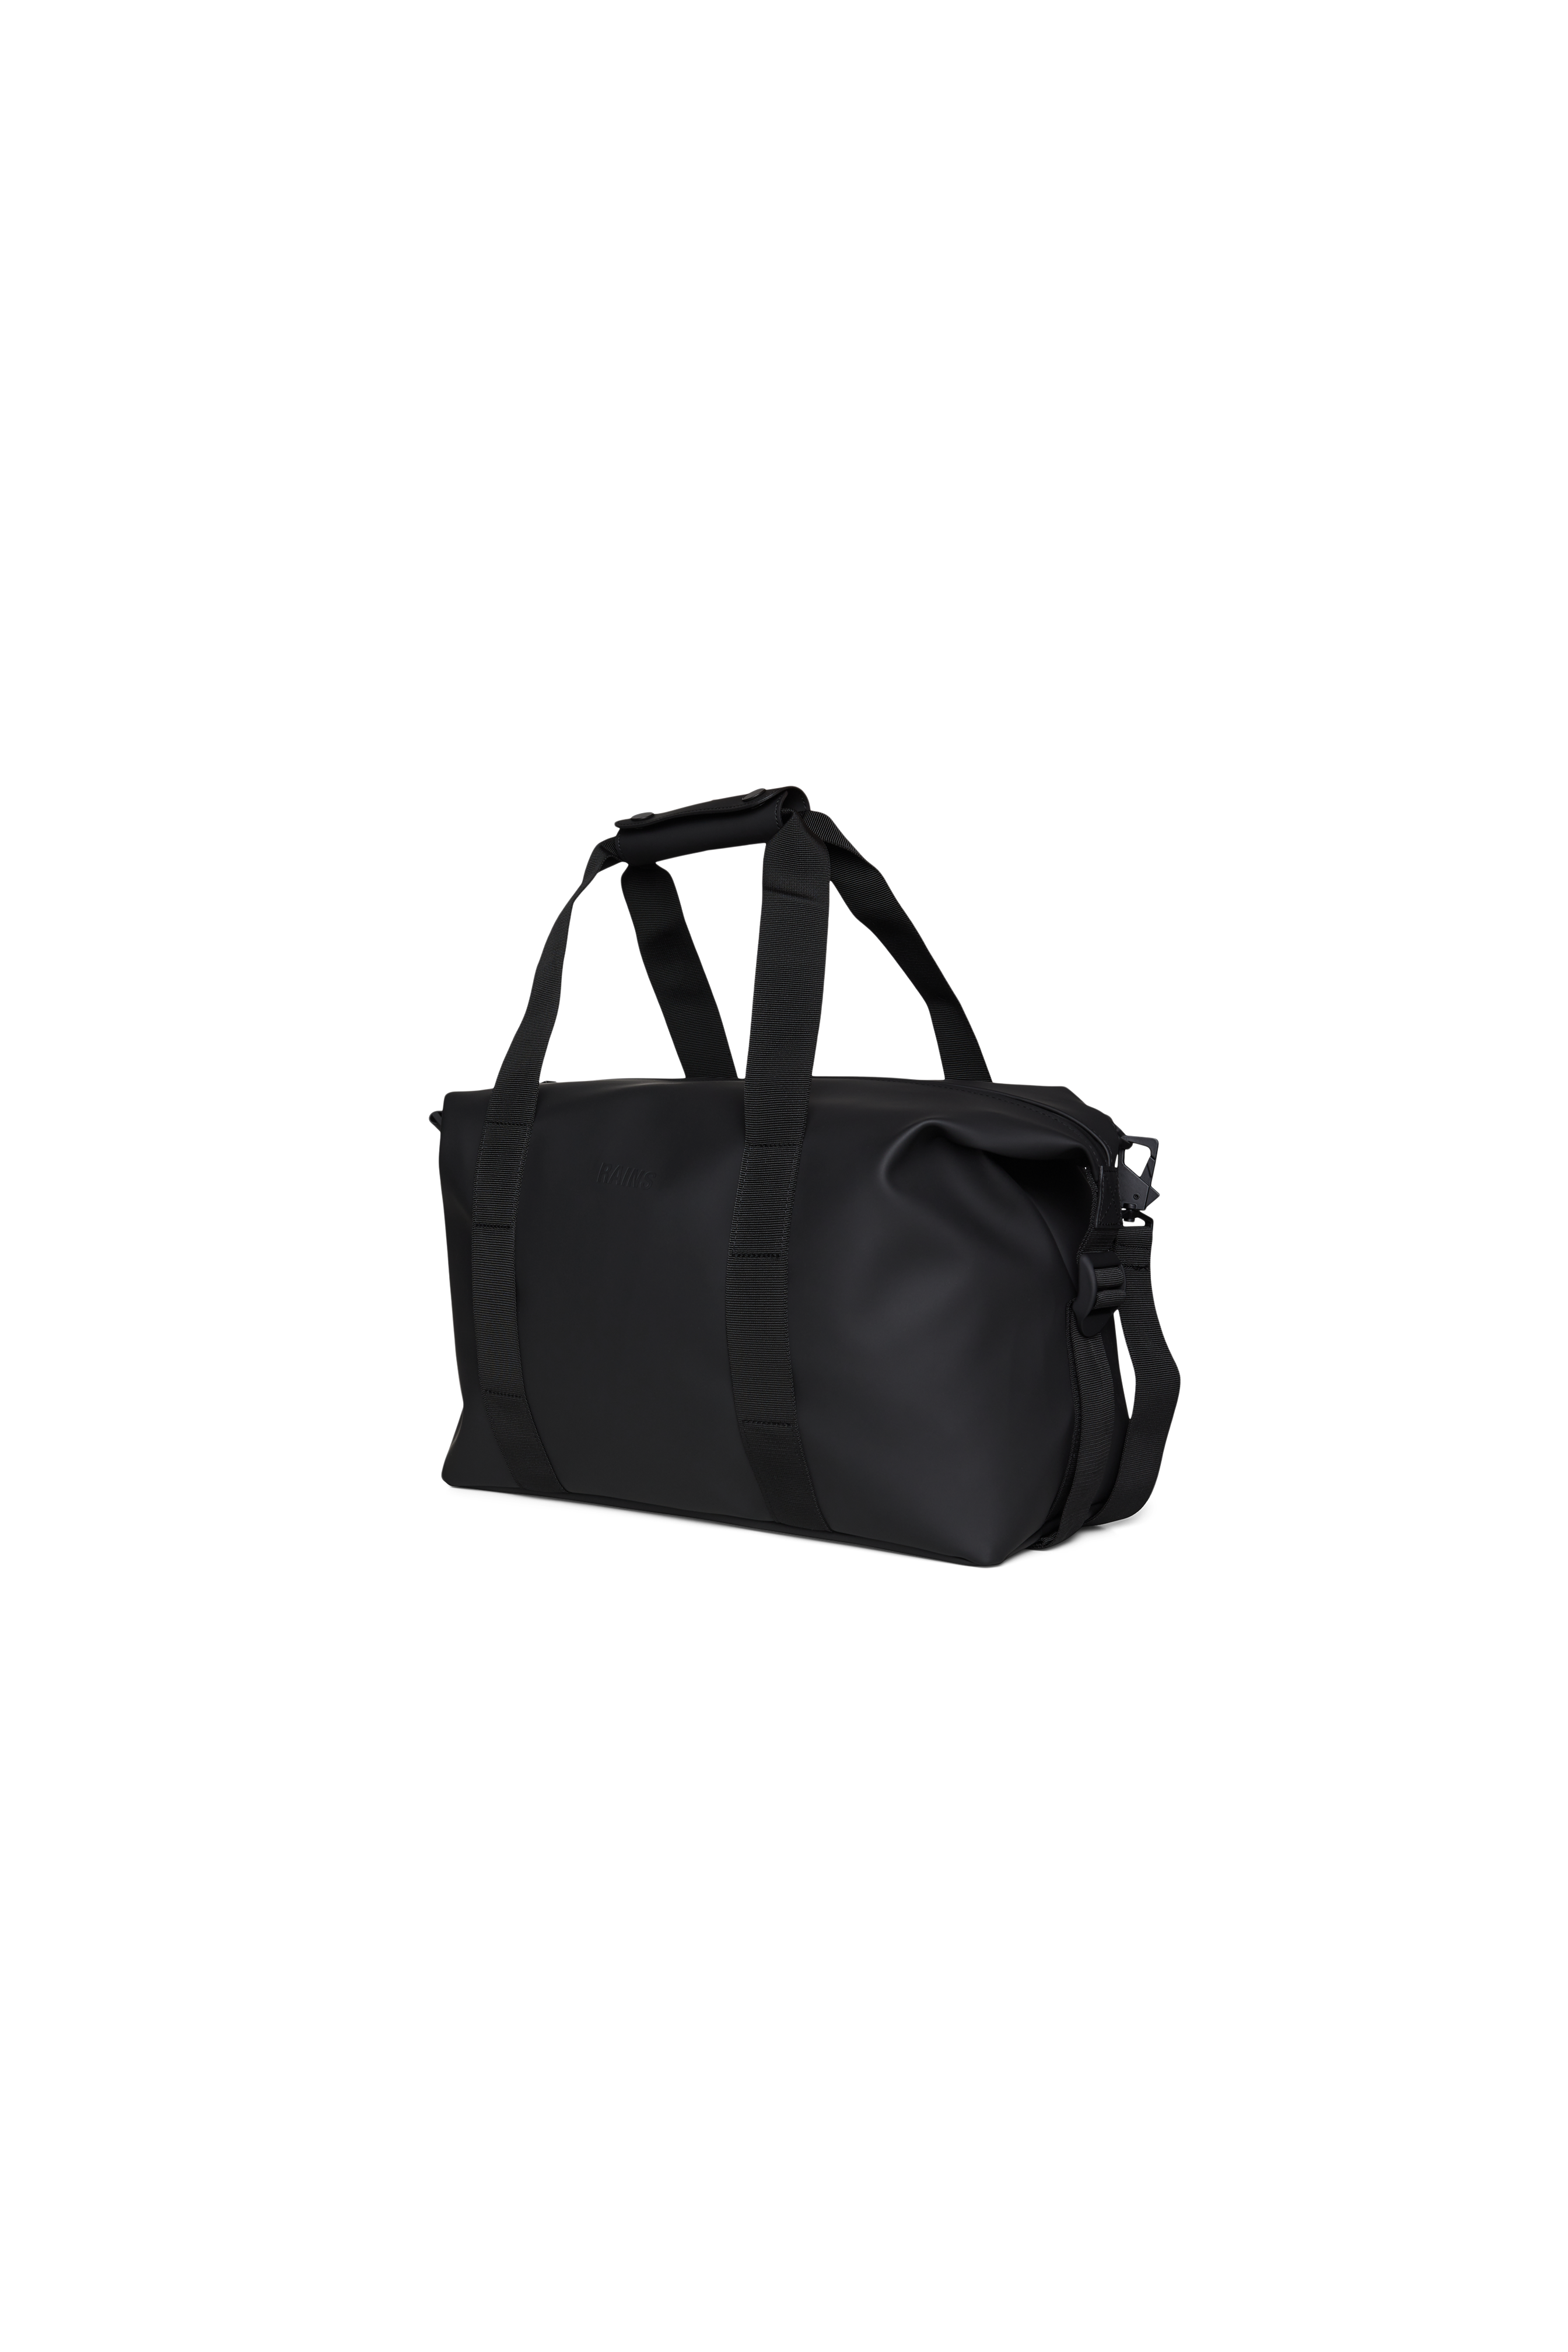 Hilo Weekend Bag Small - Black